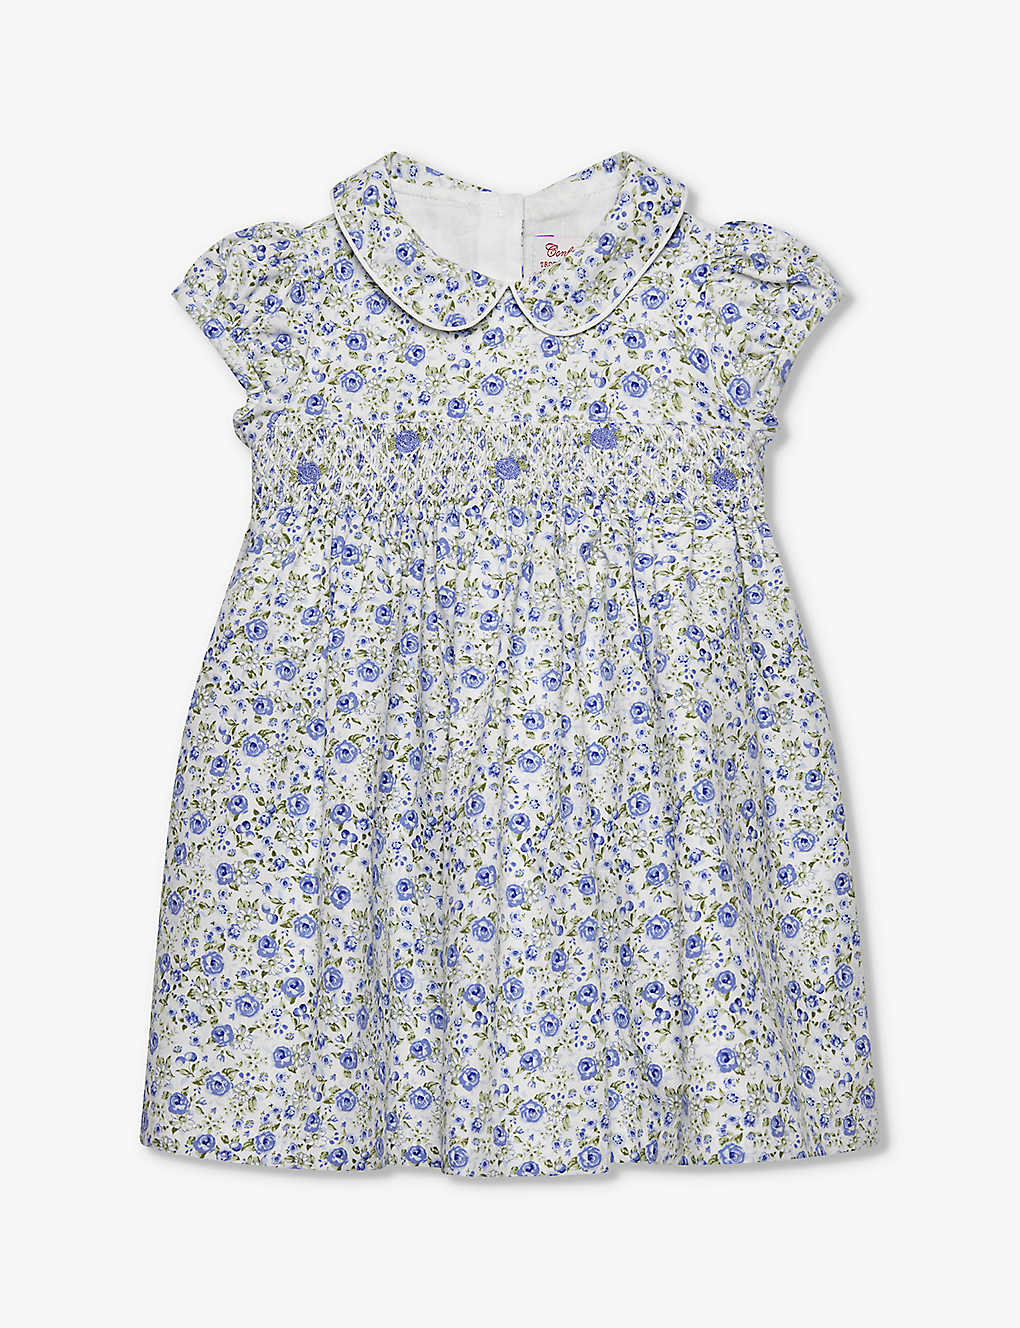 Trotters Babies'  Blue Rose Catherine Rose Floral-print Cotton Dress 3-24 Months